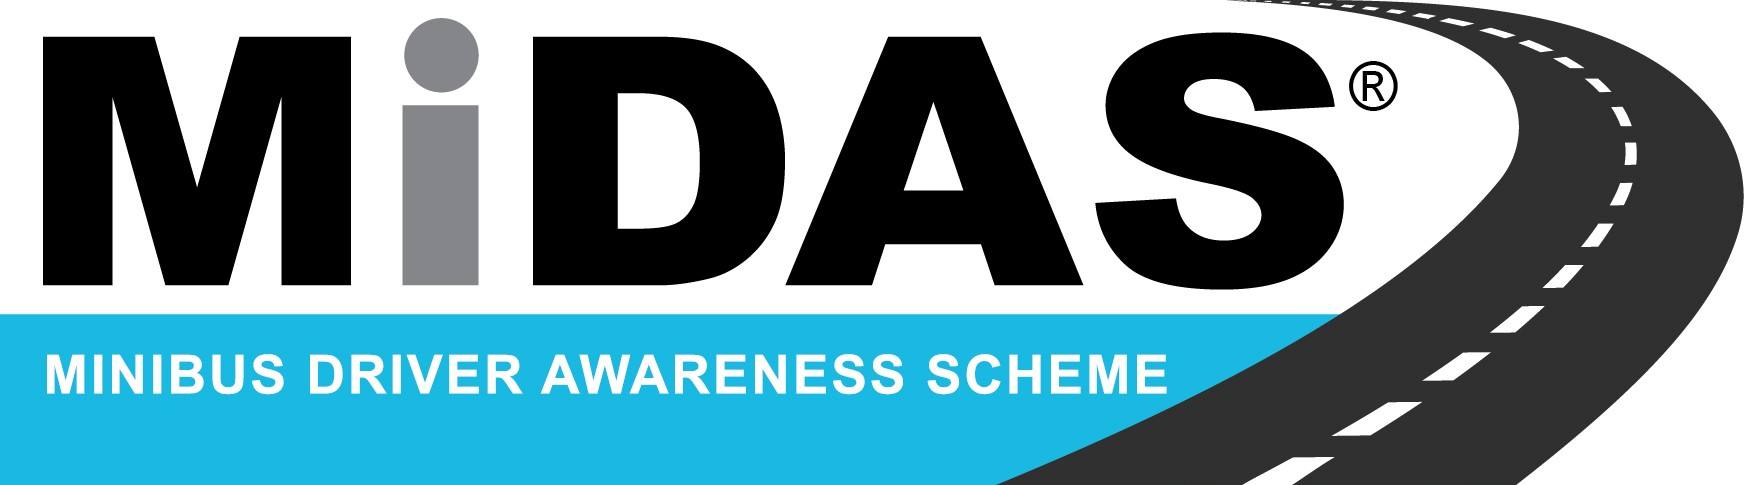 MiDAS - Minibus Driver Awareness Scheme Logo